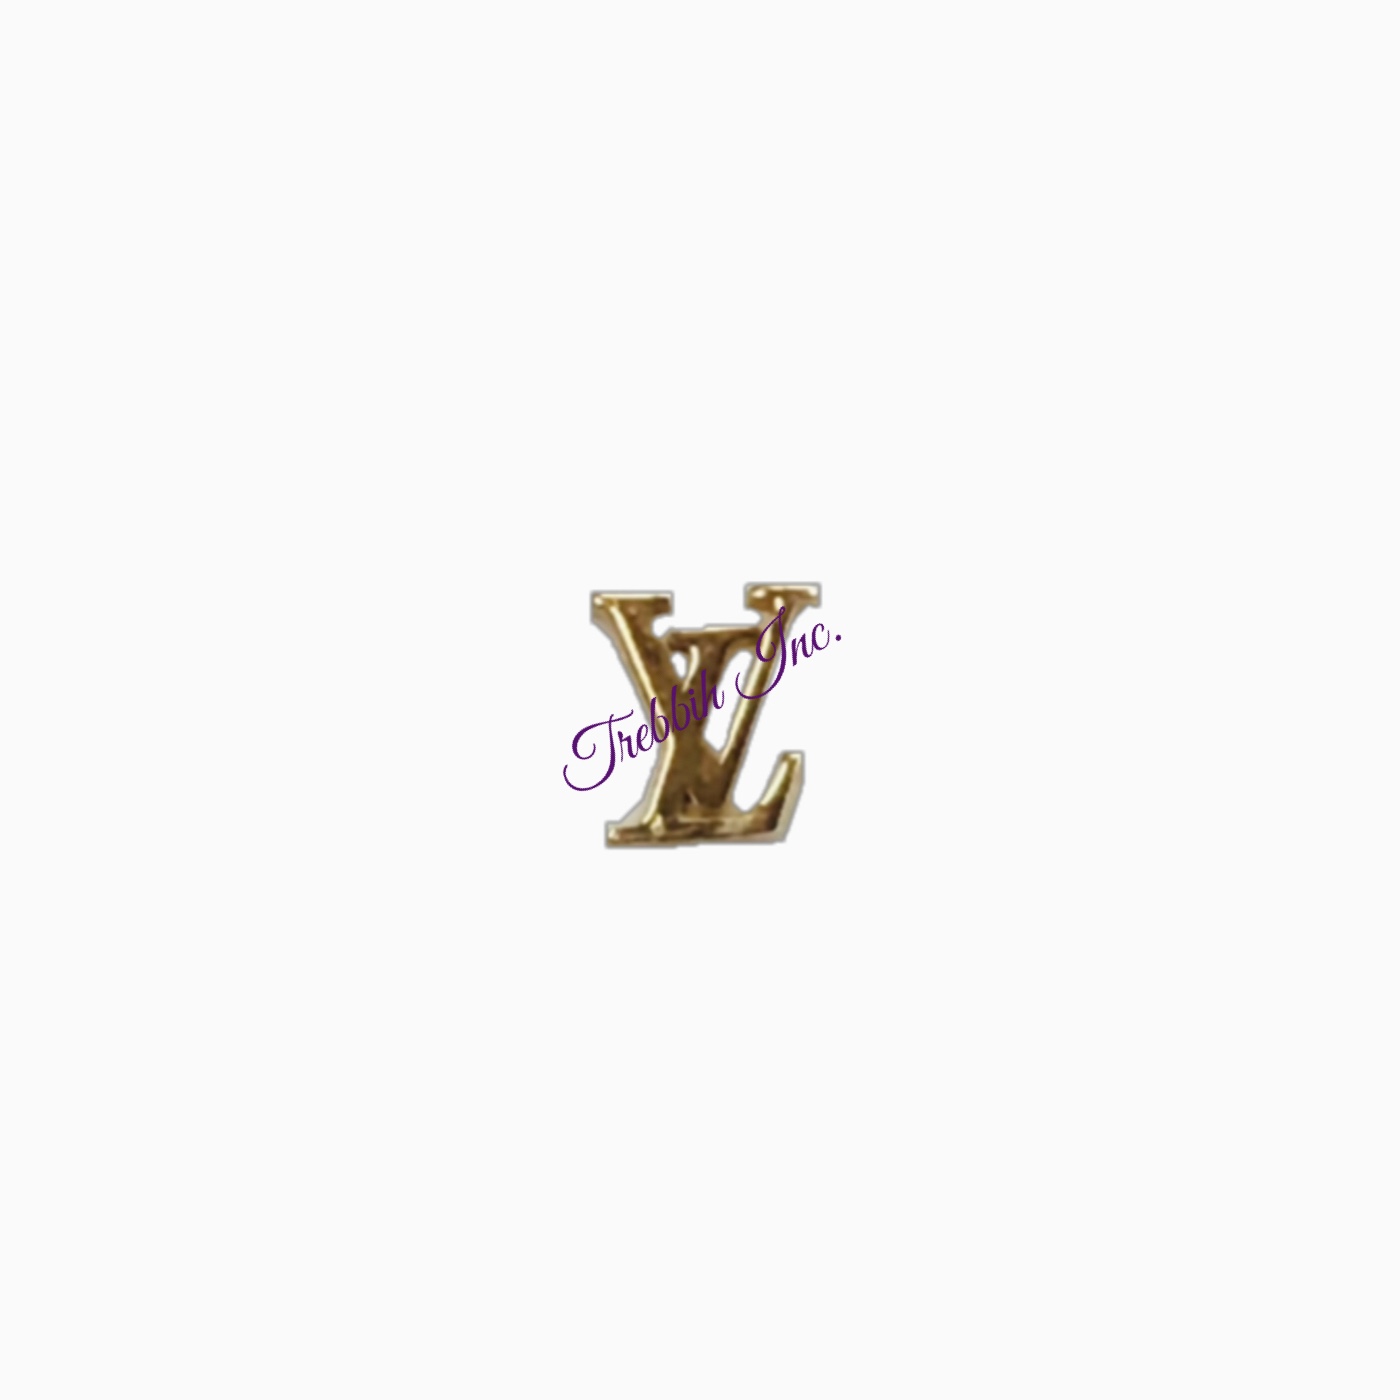 Louis Vuitton Silver Fashion Brooches & Pins for sale